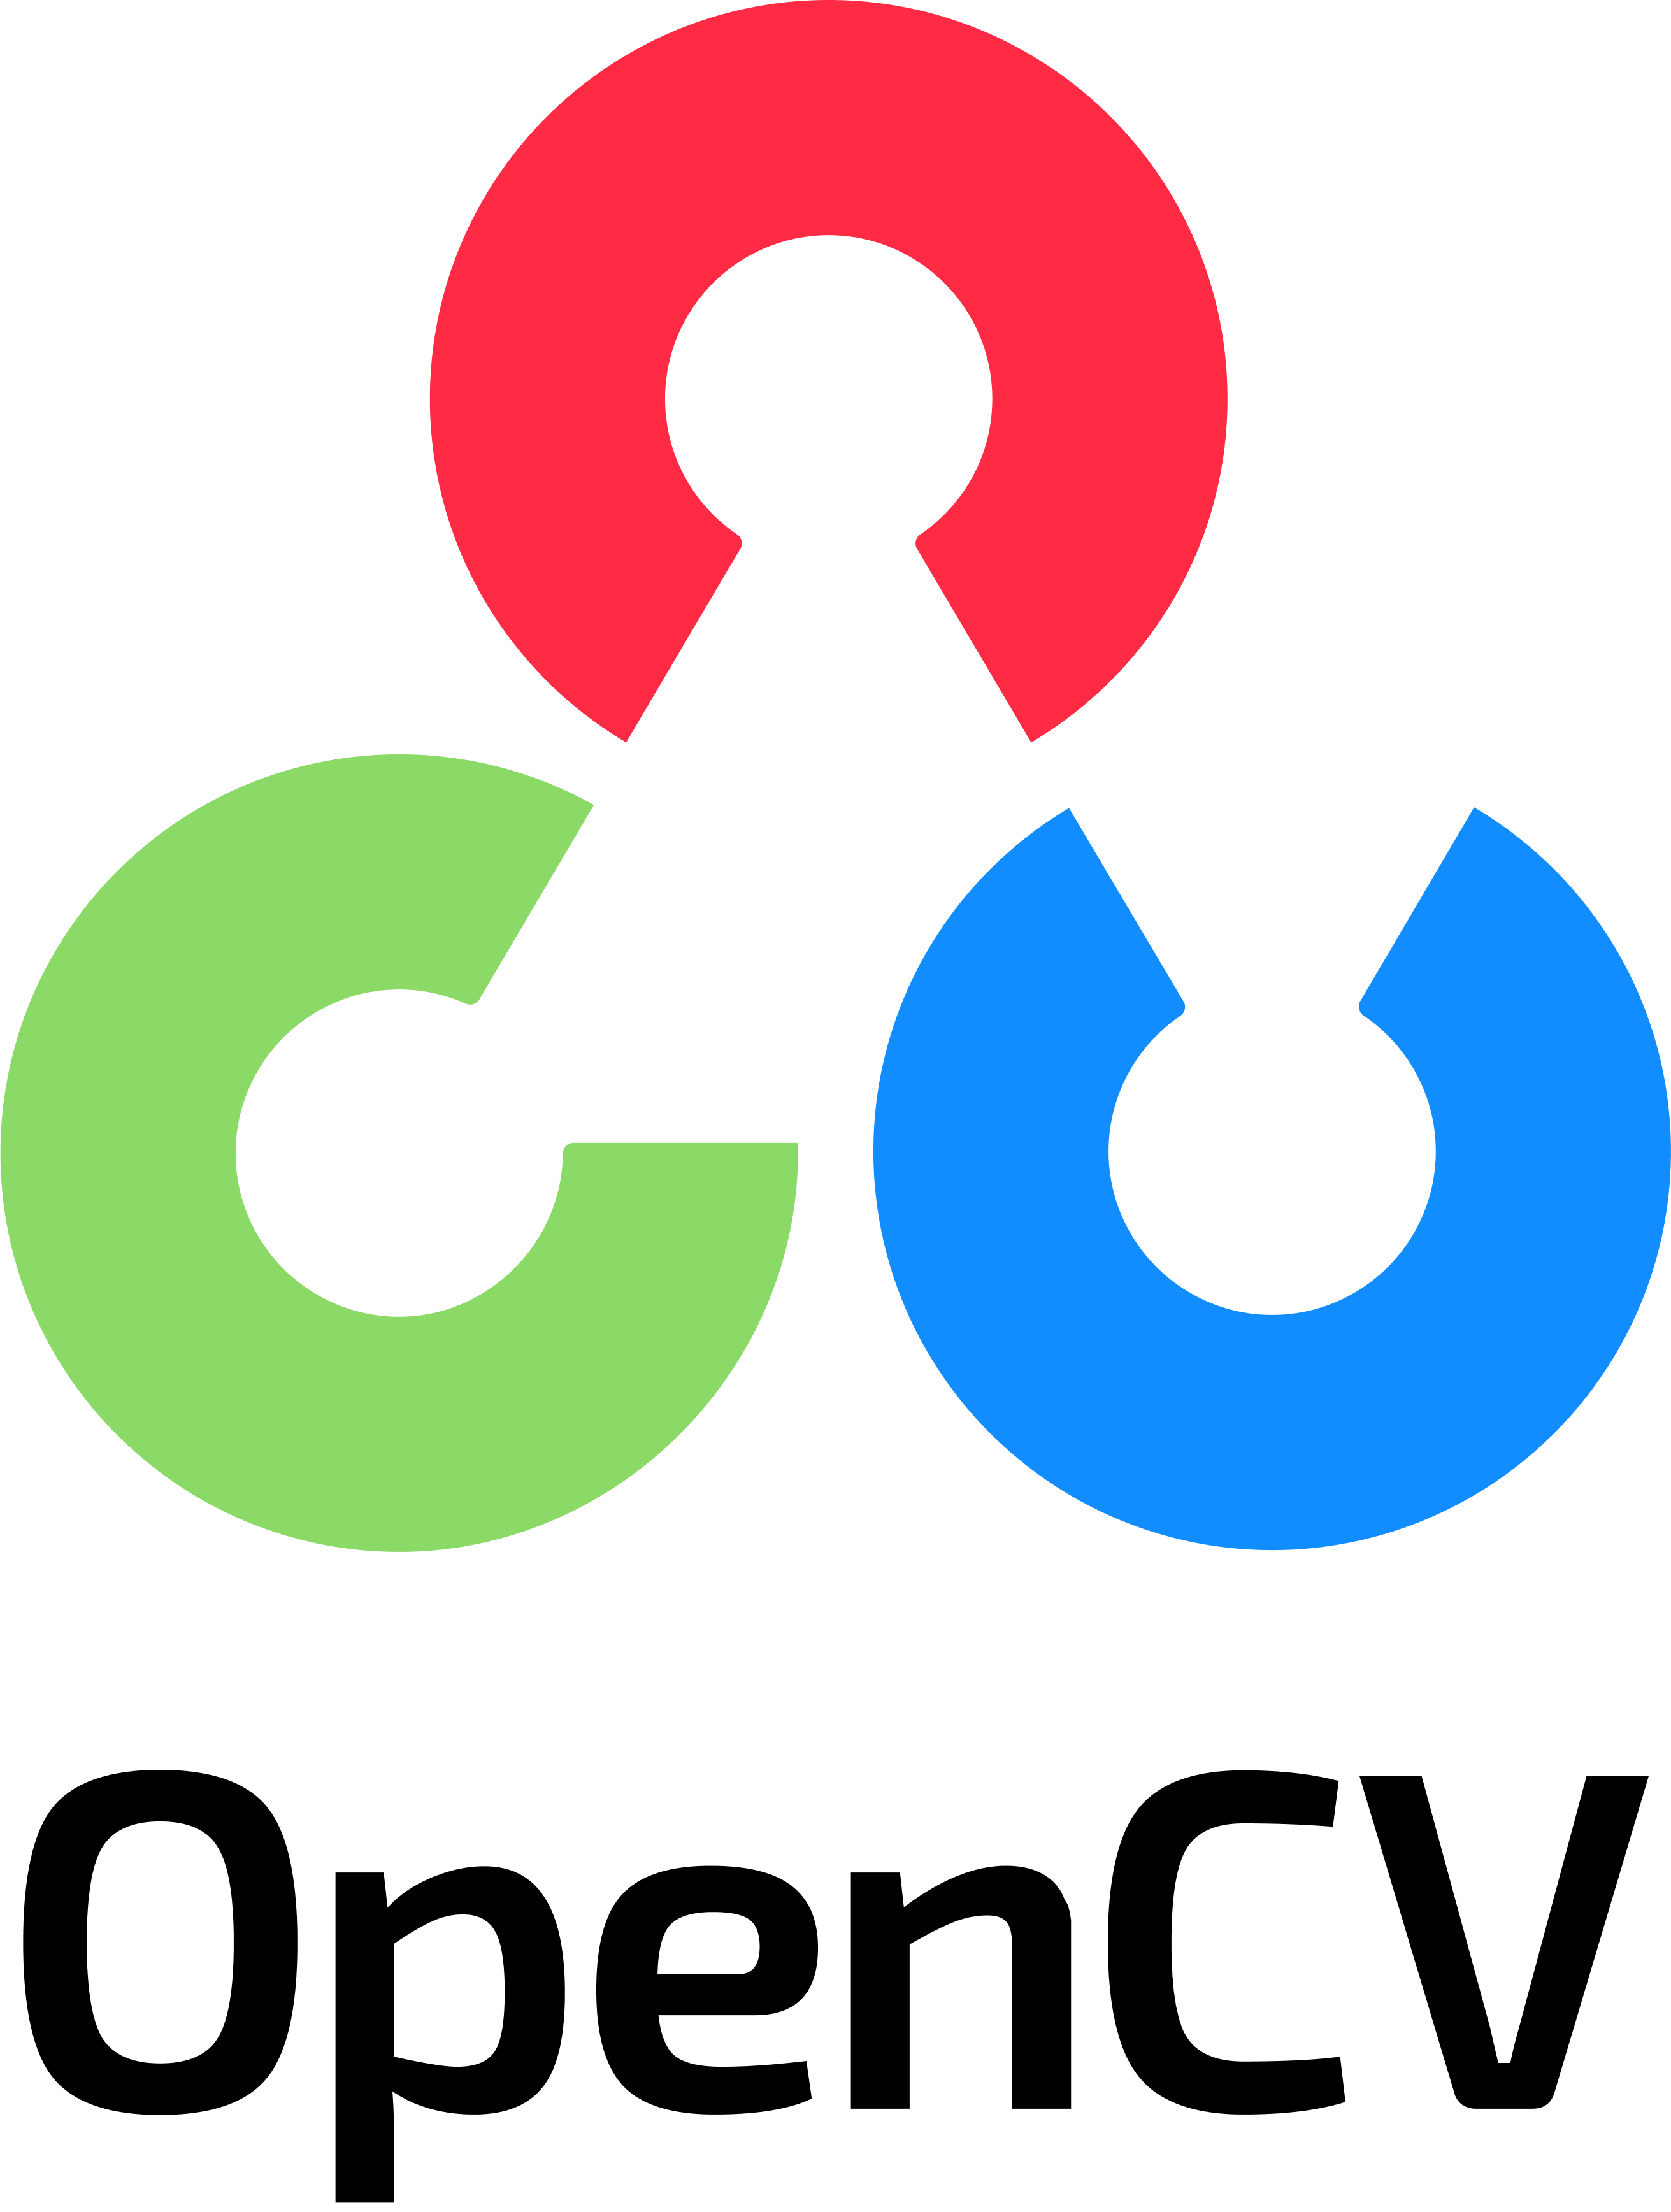 OpenCV_logo_black_